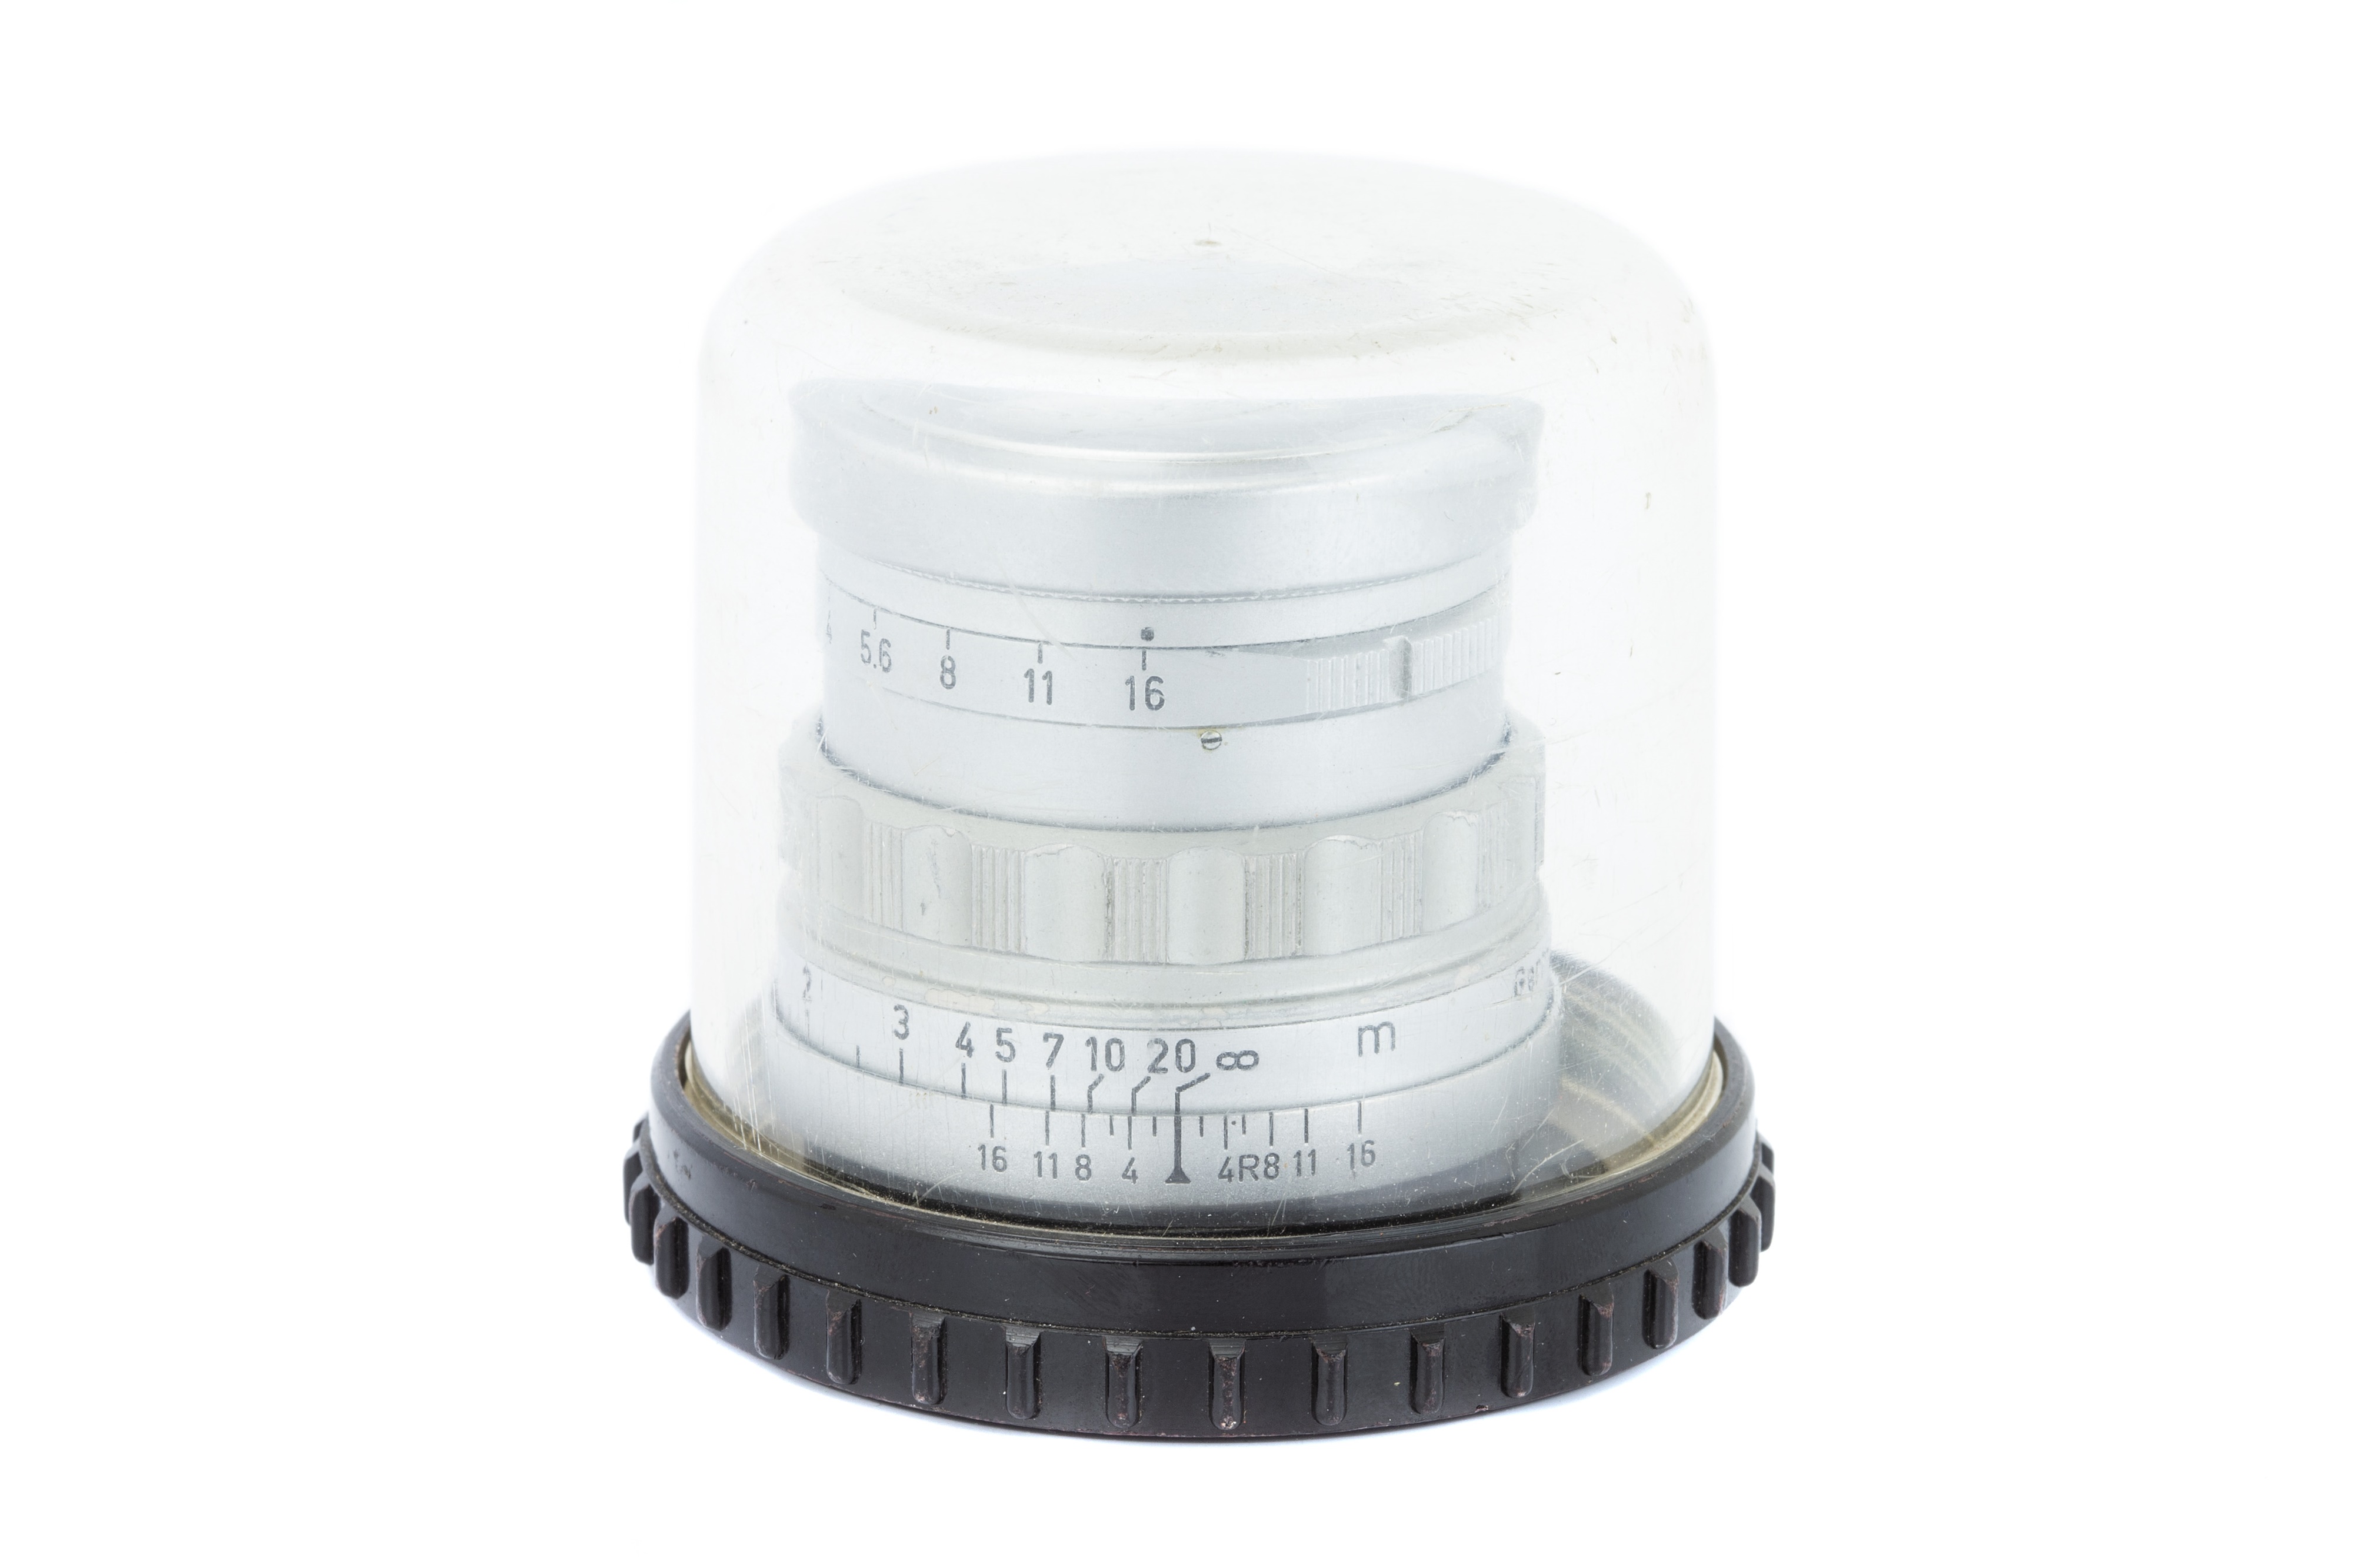 A Leitz Summicron f/2 50mm Rigid Lens, - Image 4 of 4